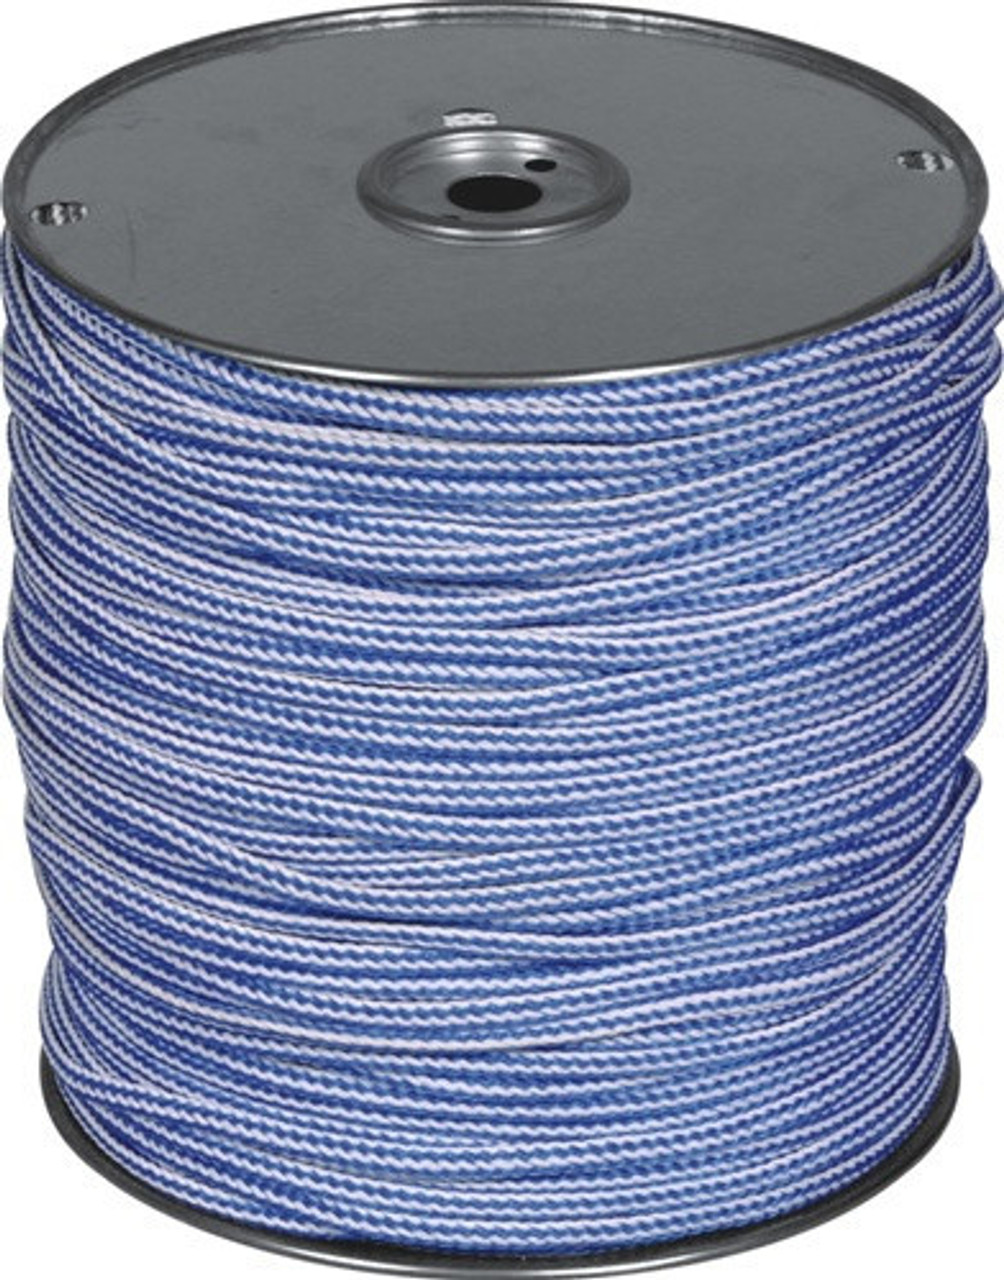 Twist braided rope blue/white..1/4x1000